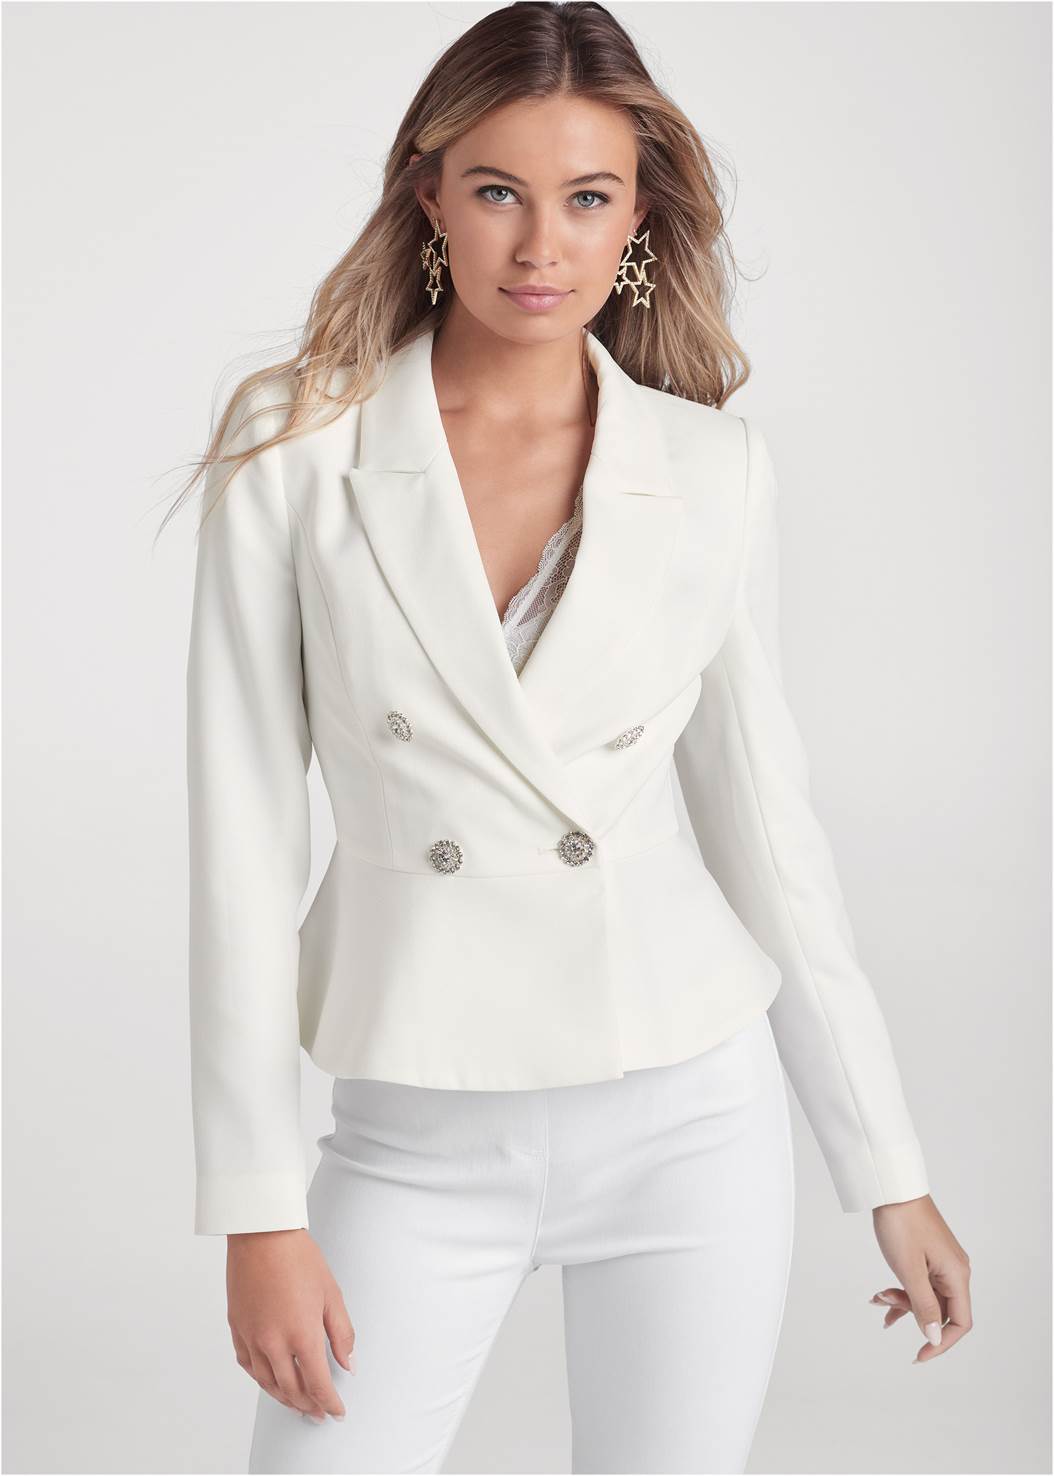 Peplum Suit Jacket in Off White | VENUS